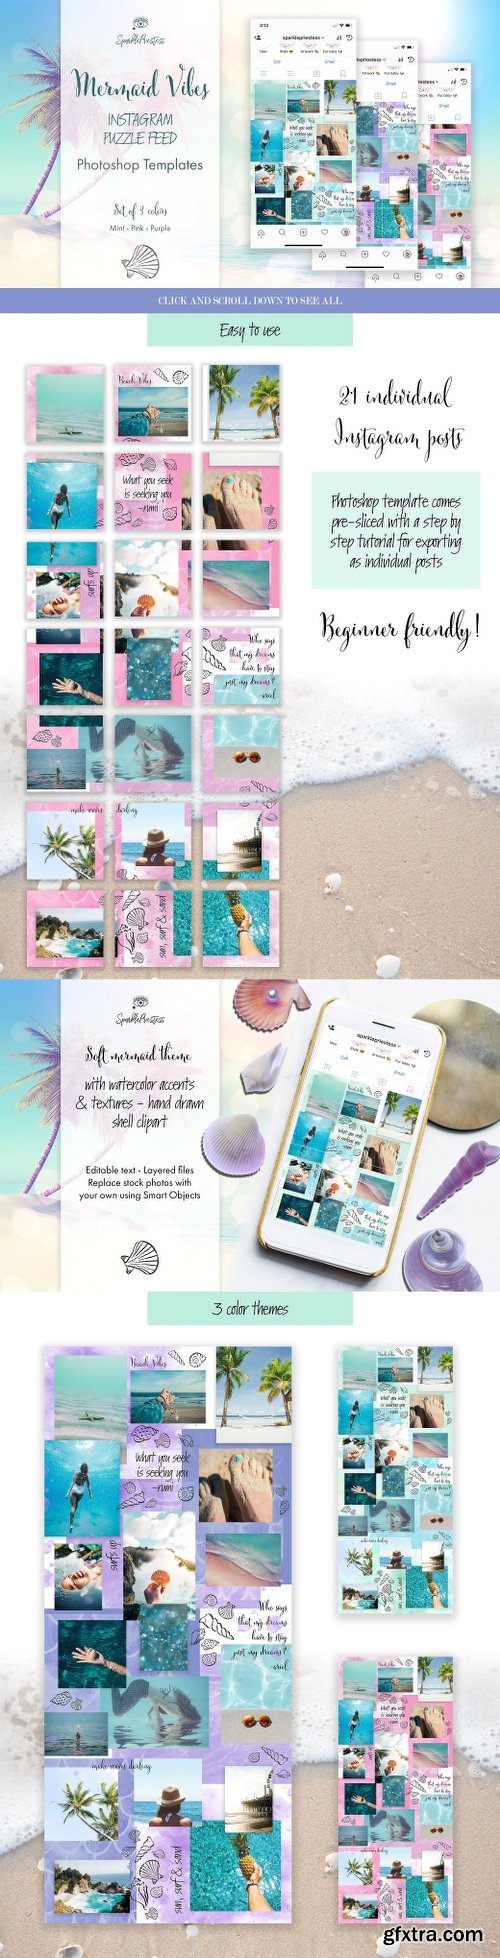 CreativeMarket Mermaid Vibes Instagram Puzzle Feed 2546799